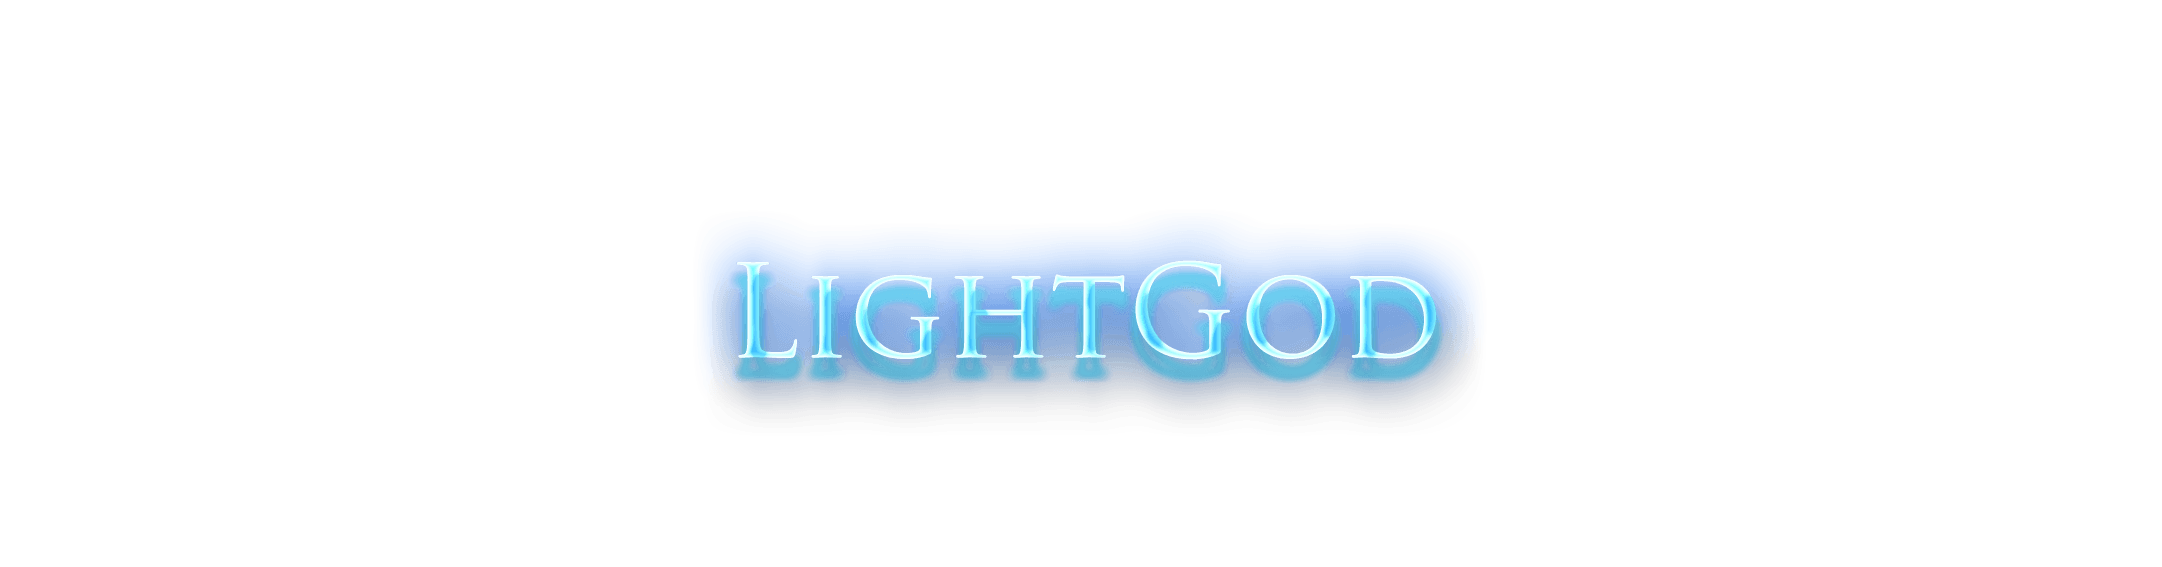 LightGod banner